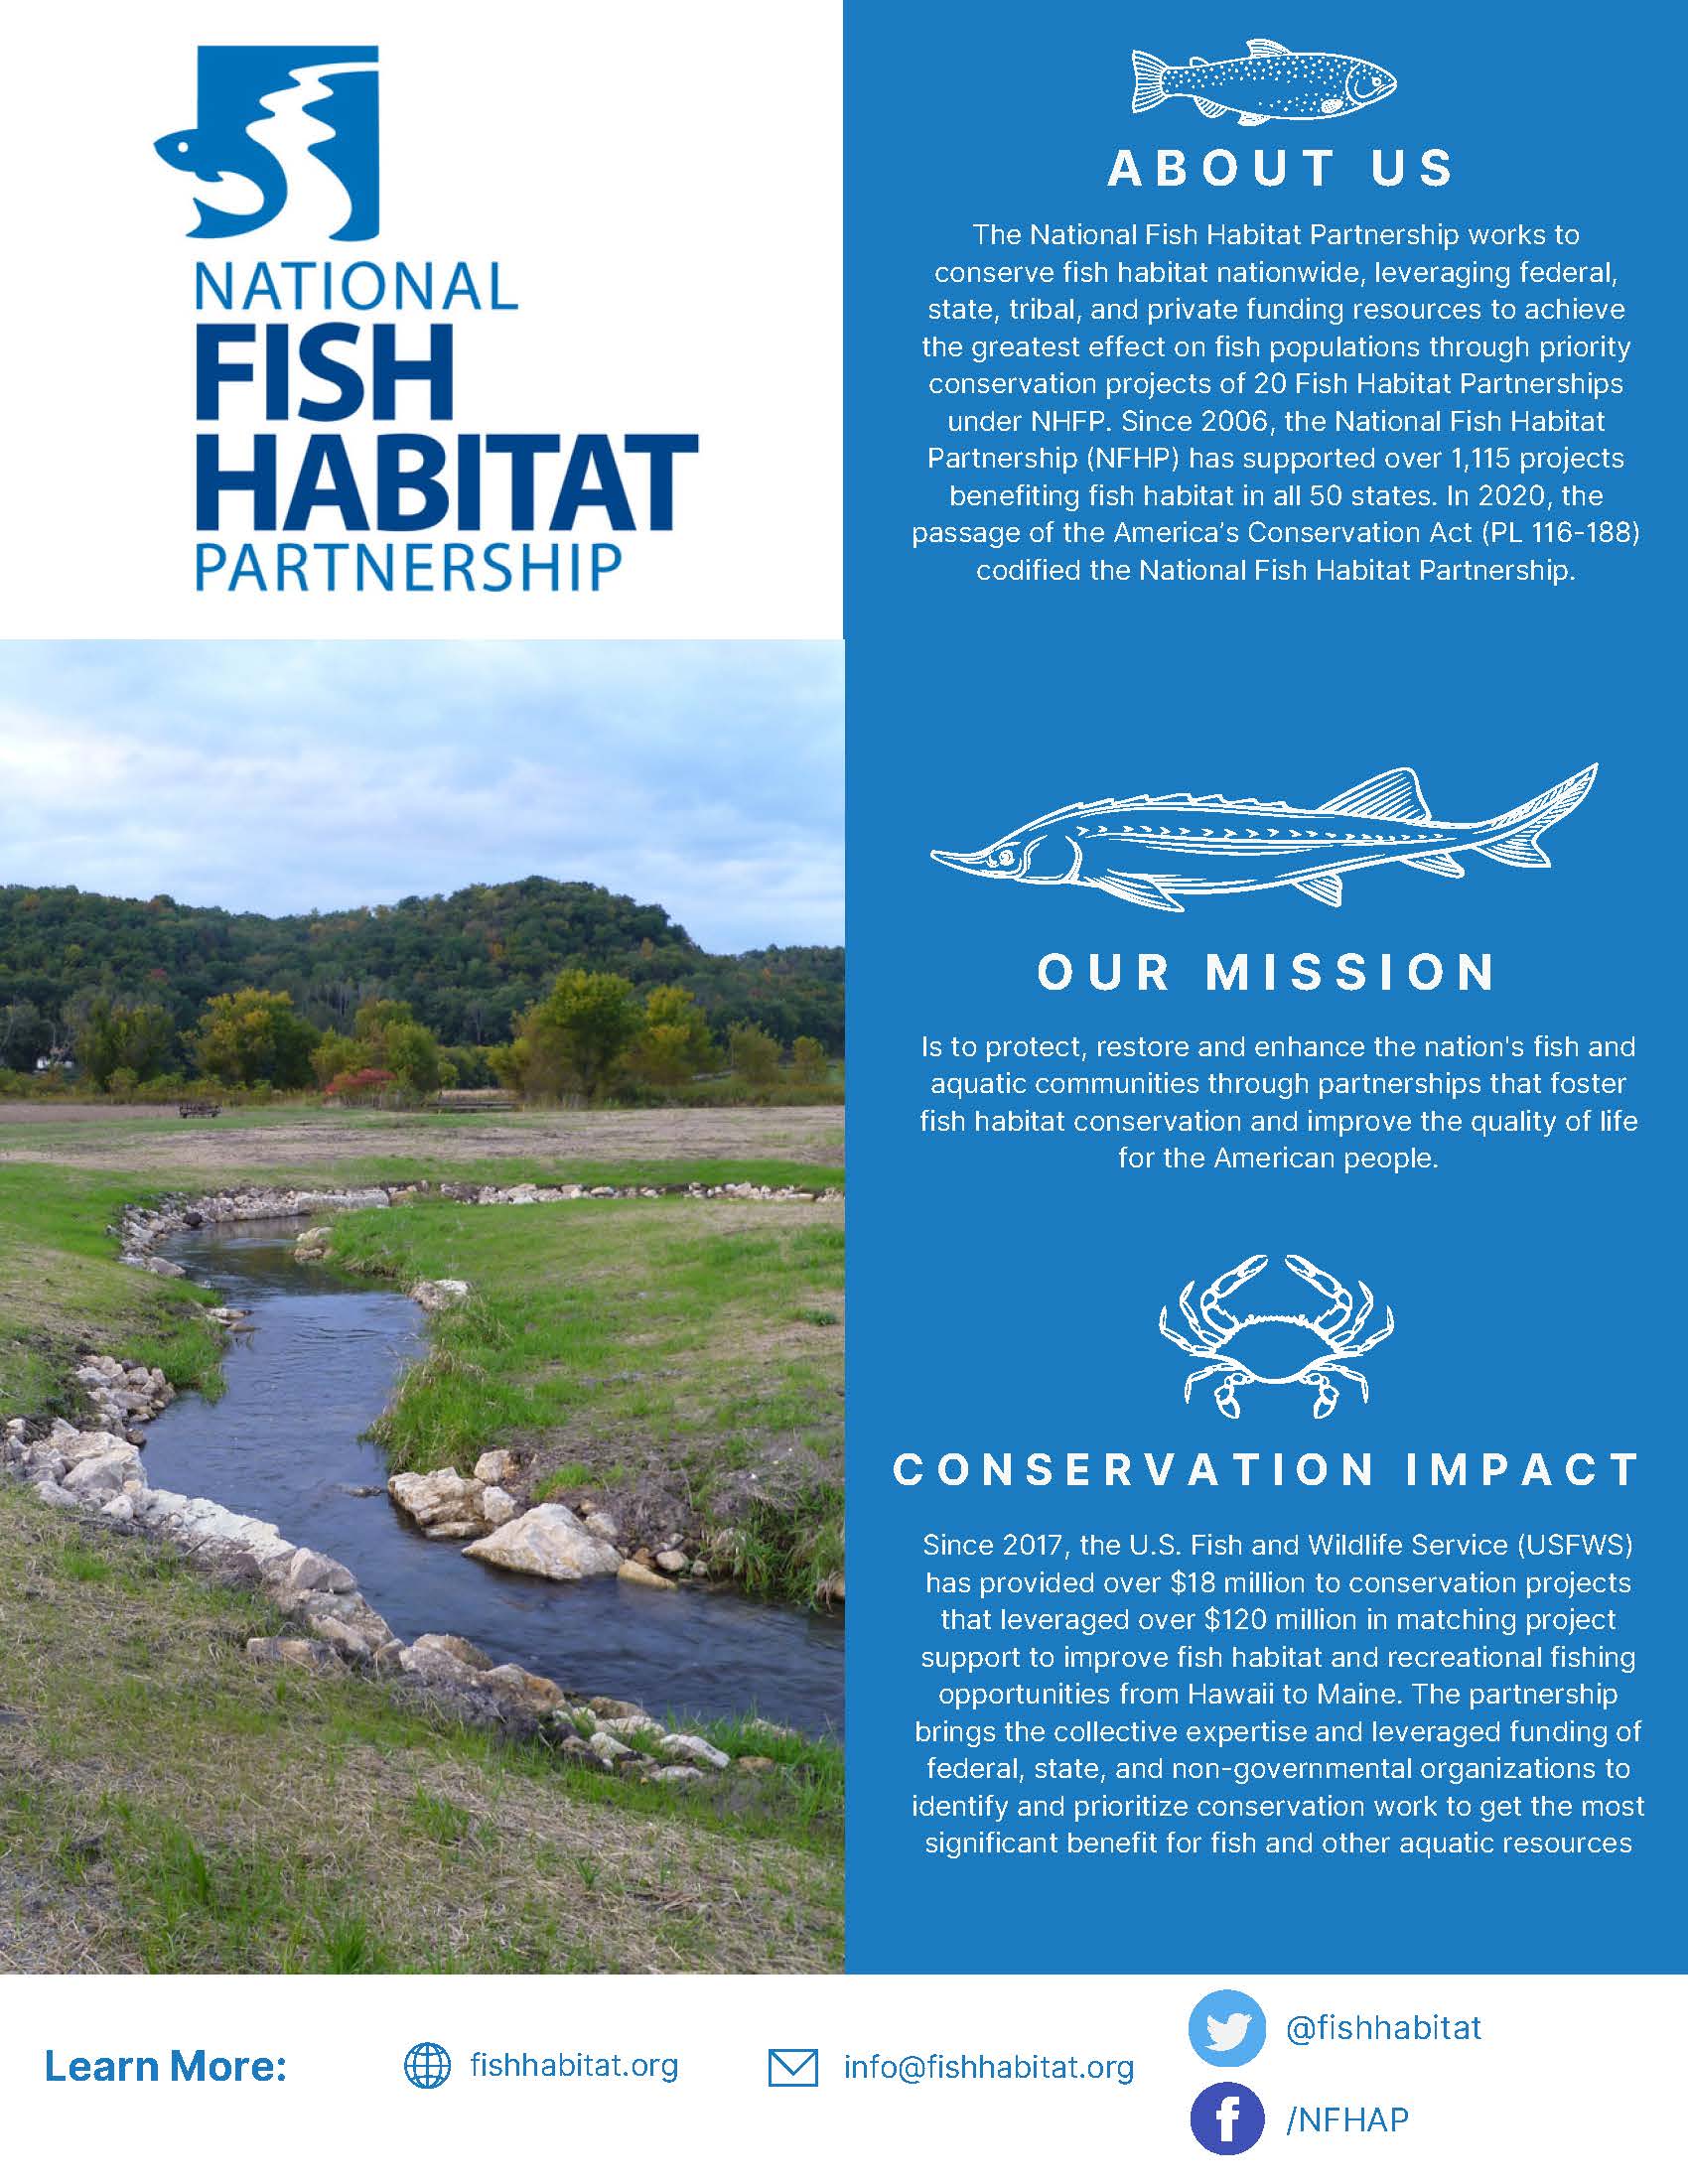 National Fish Habitat Partnership Releases Updated Fact Sheet